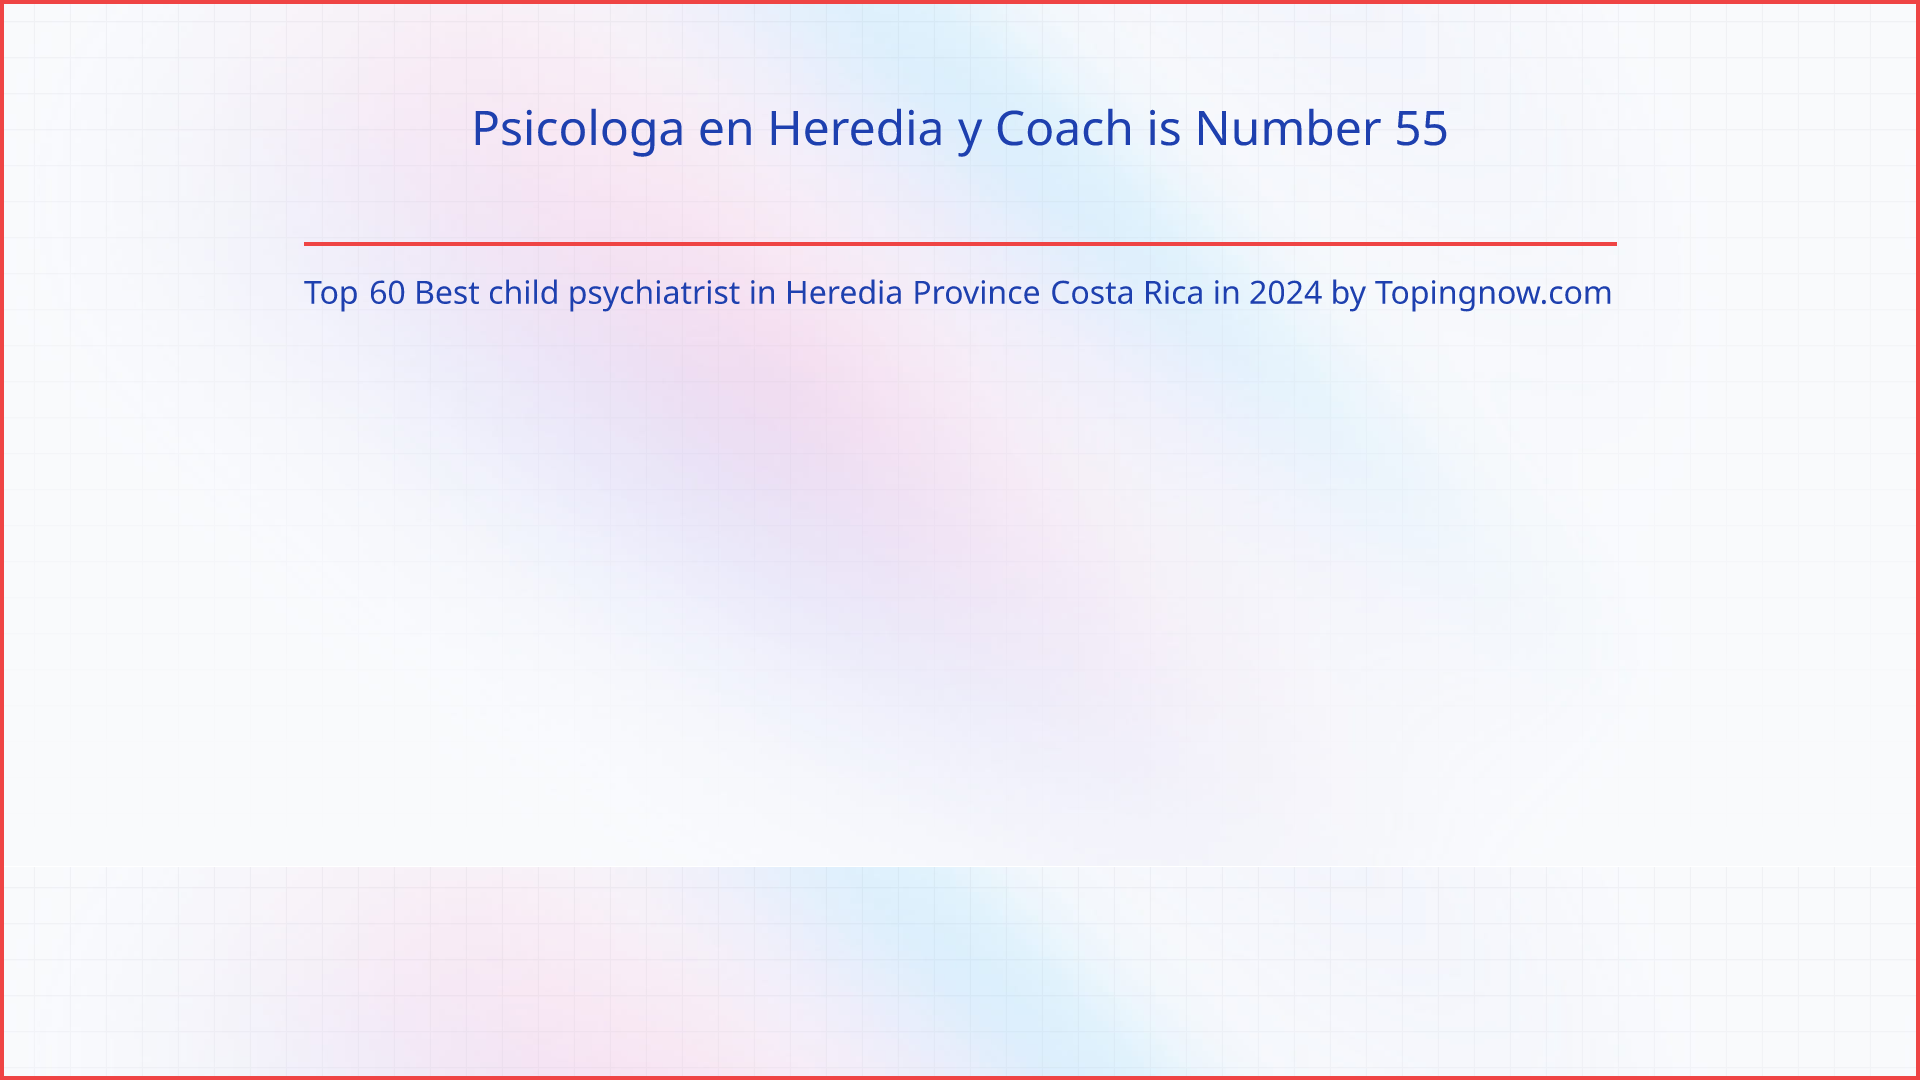 Psicologa en Heredia y Coach: Top 60 Best child psychiatrist in Heredia Province Costa Rica in 2024